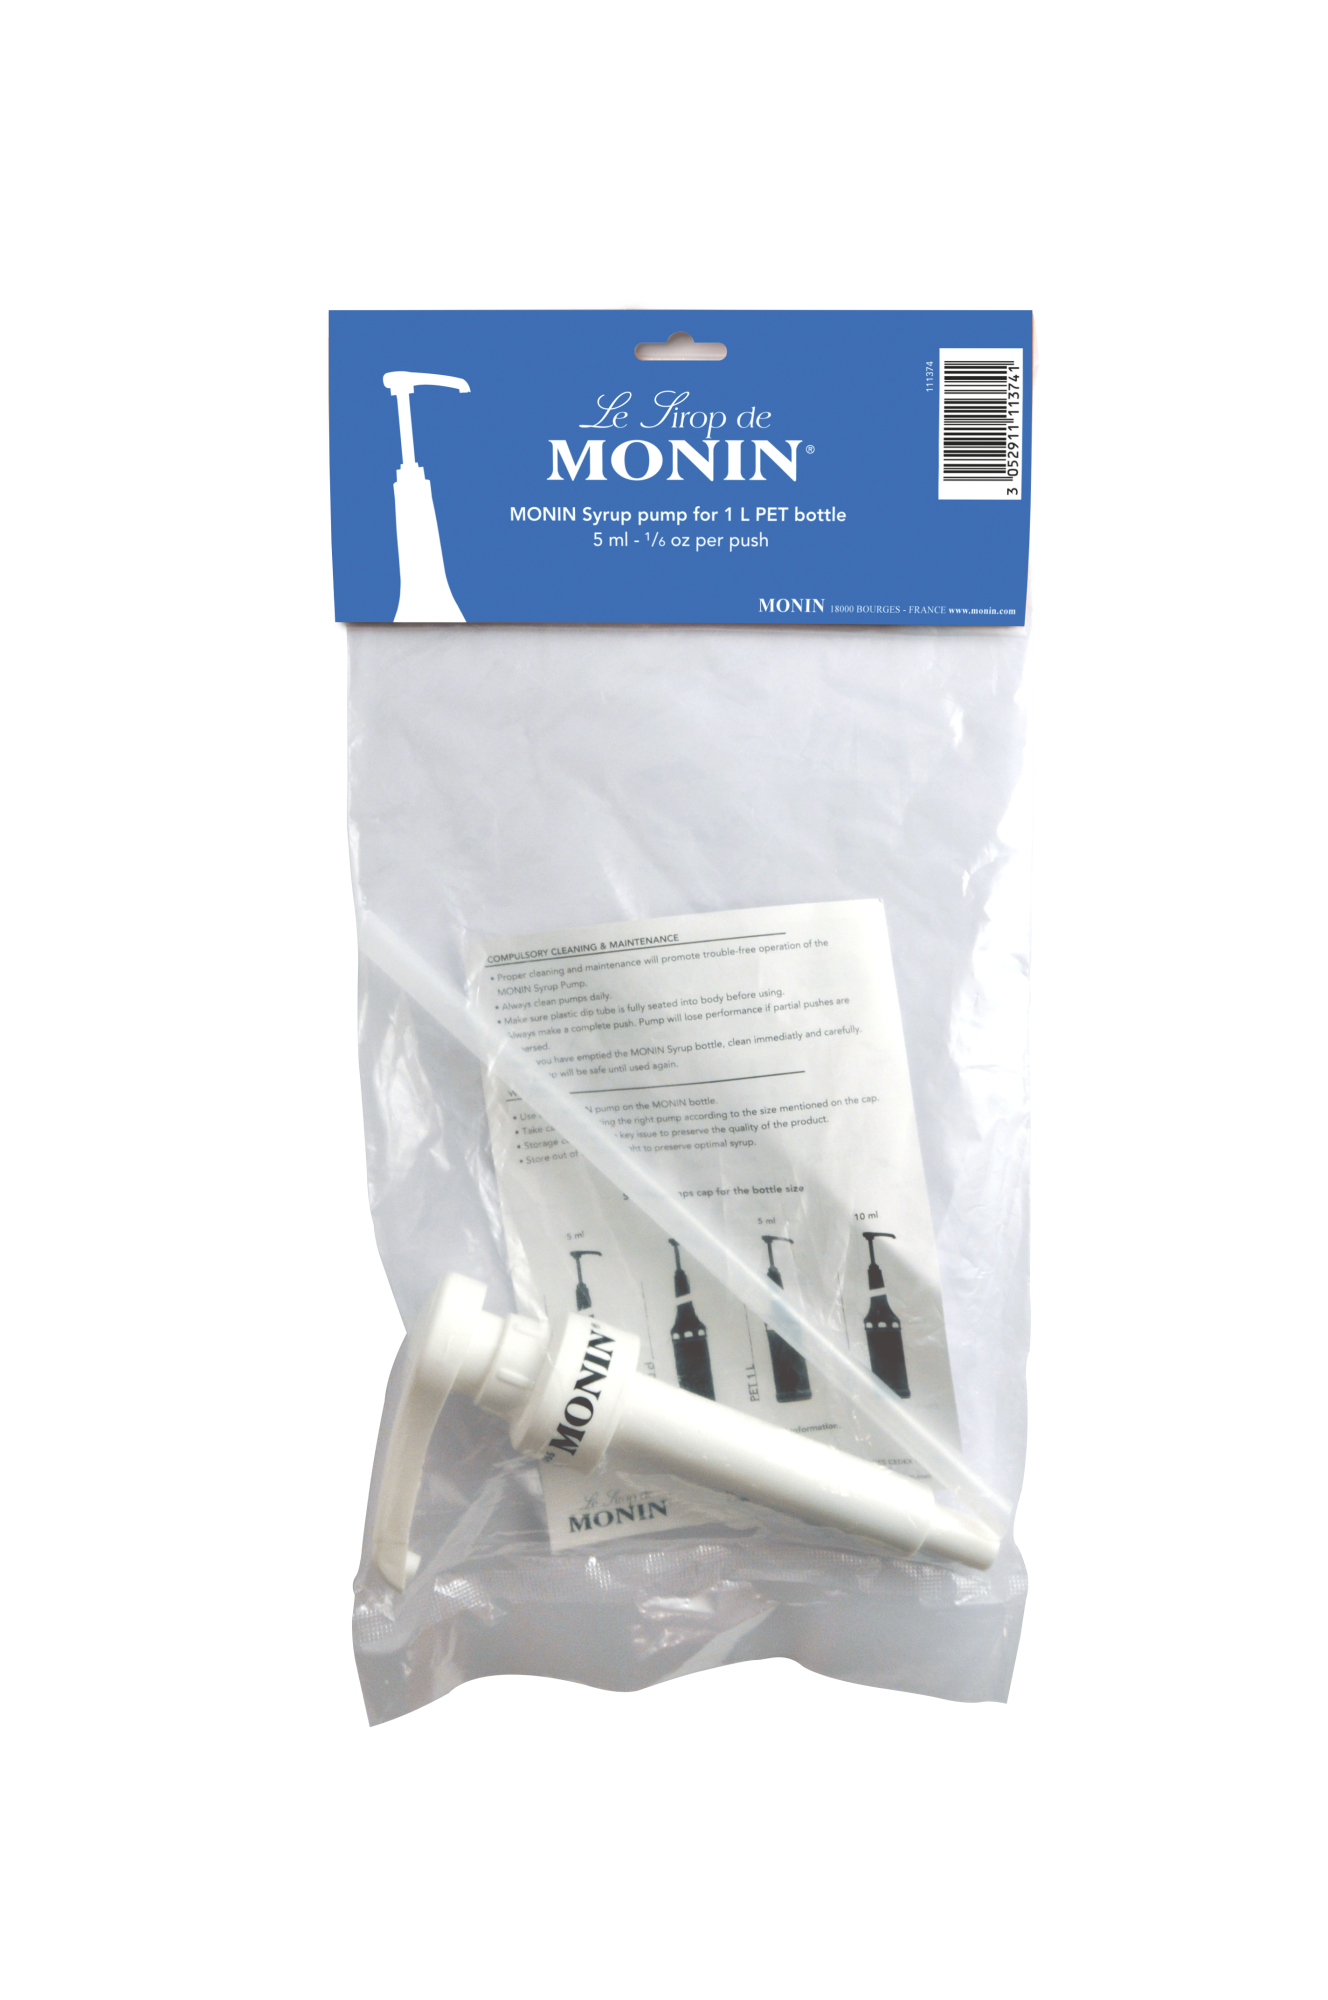 MONIN 10ml pump for 1L PET and 25cl MONIN Premium Syrup bottles